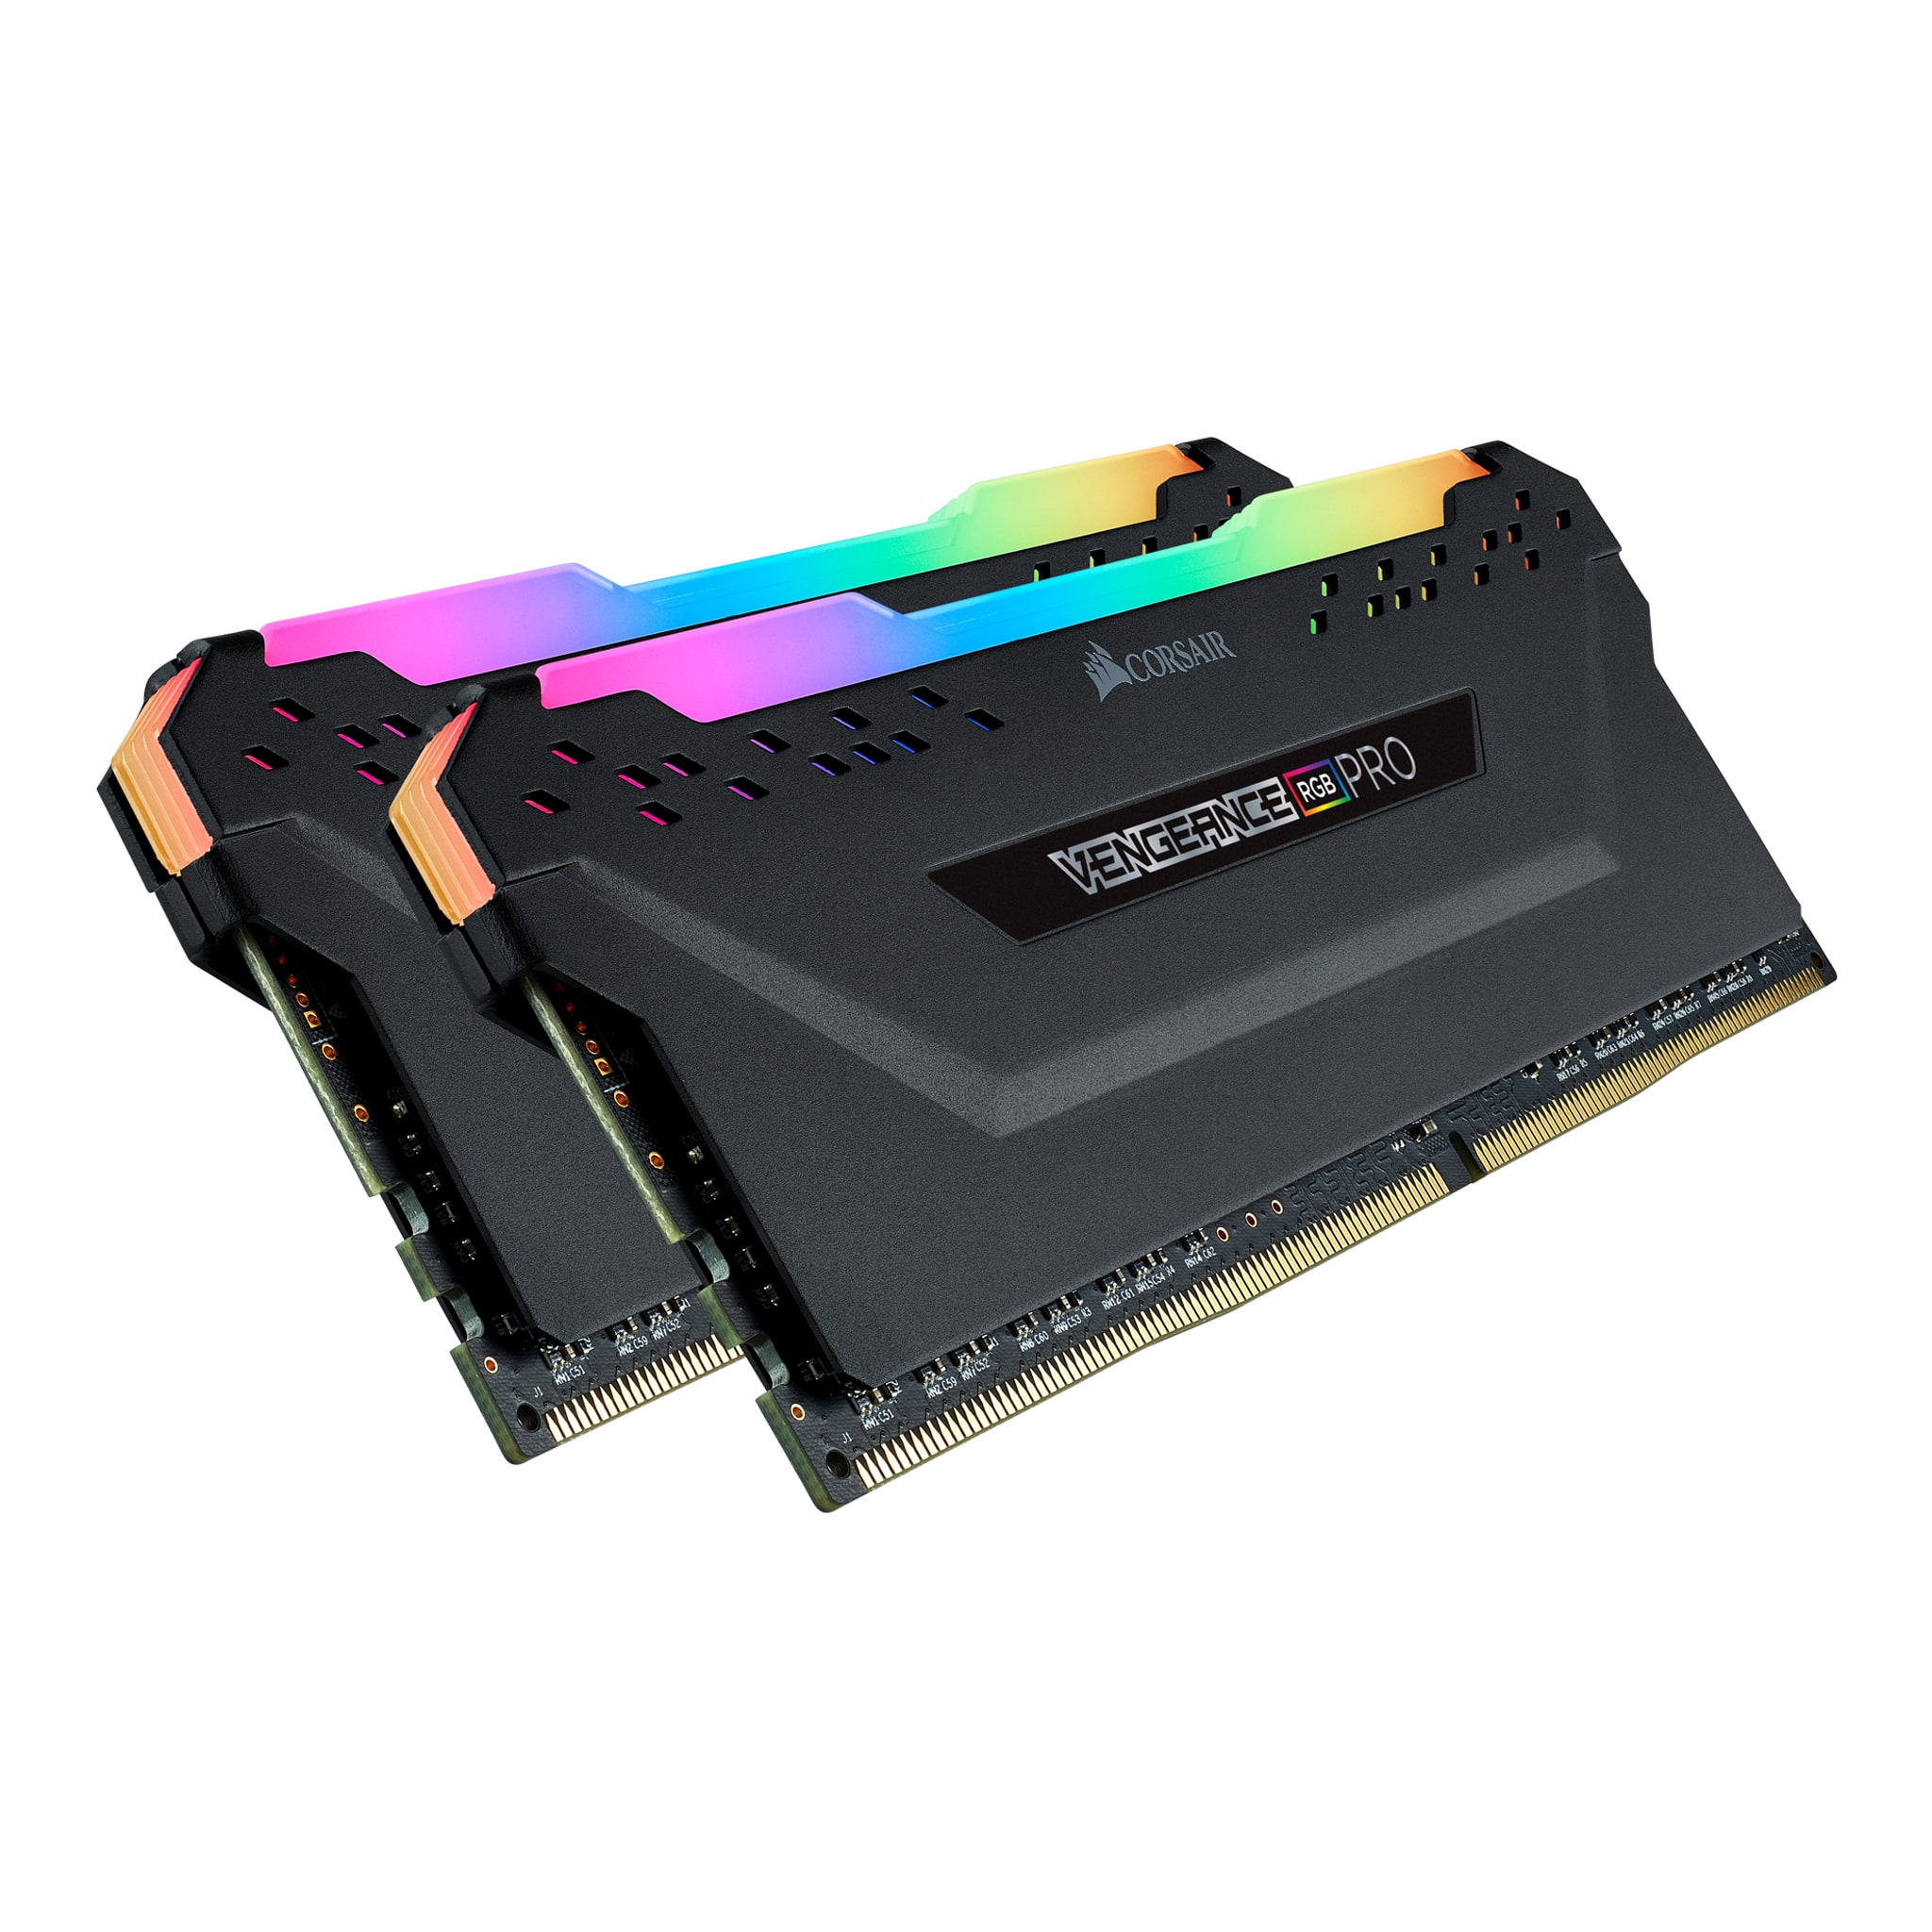 Crucial Ballistix 32GB Kit (2 x 16GB) DDR4-3000 Desktop Gaming Memory  (Black) BL2K16G30C15U4B